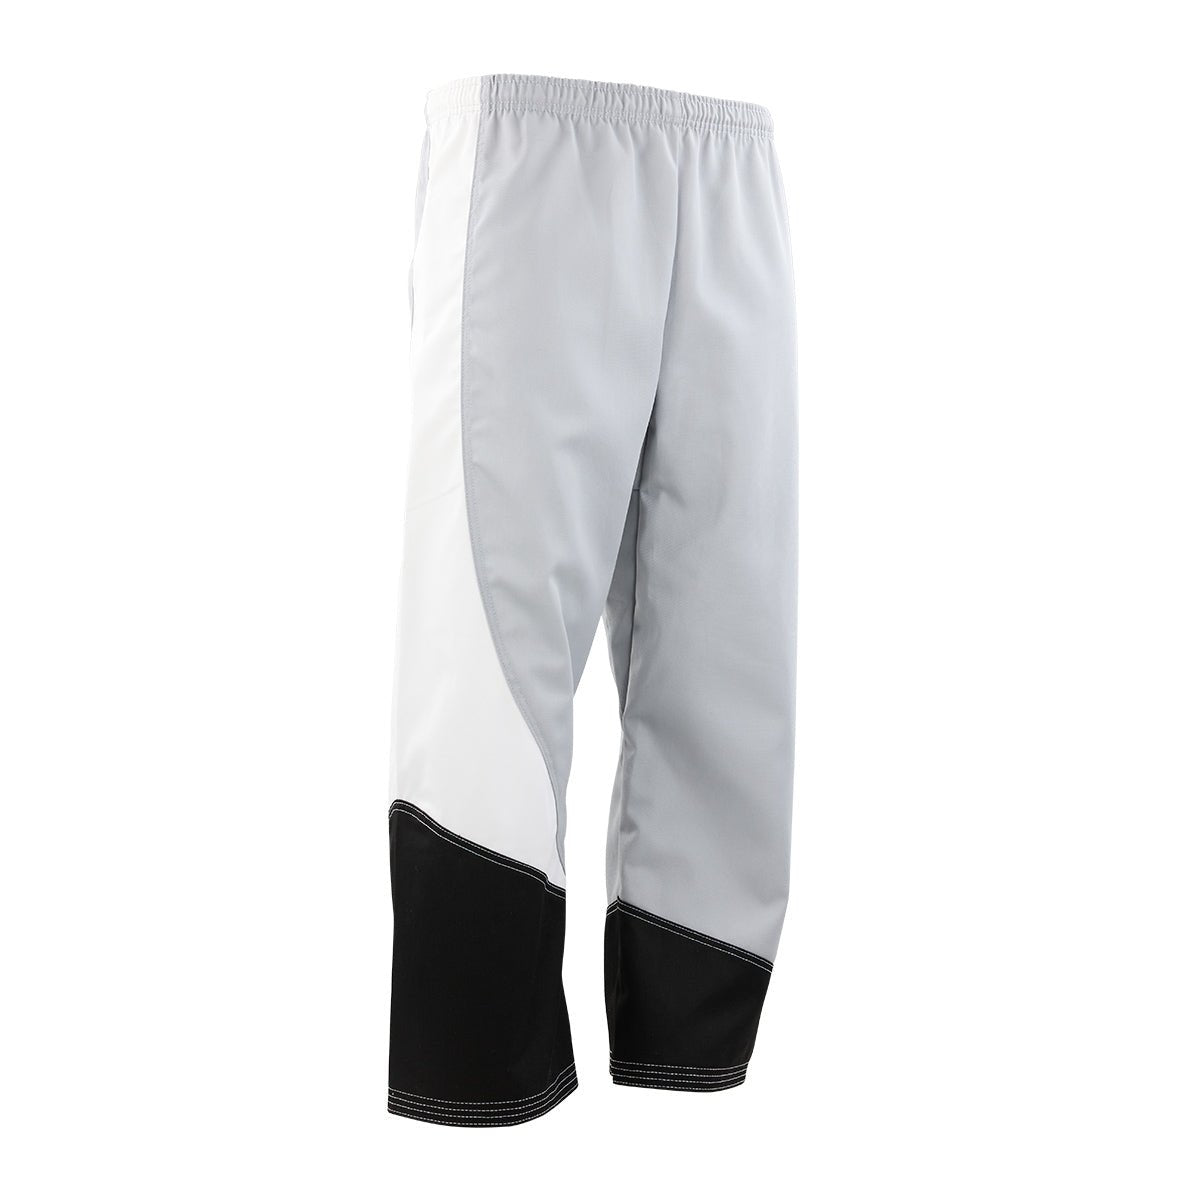 Tri-Color Diagonal Program Uniform Pants White/Black/Grey